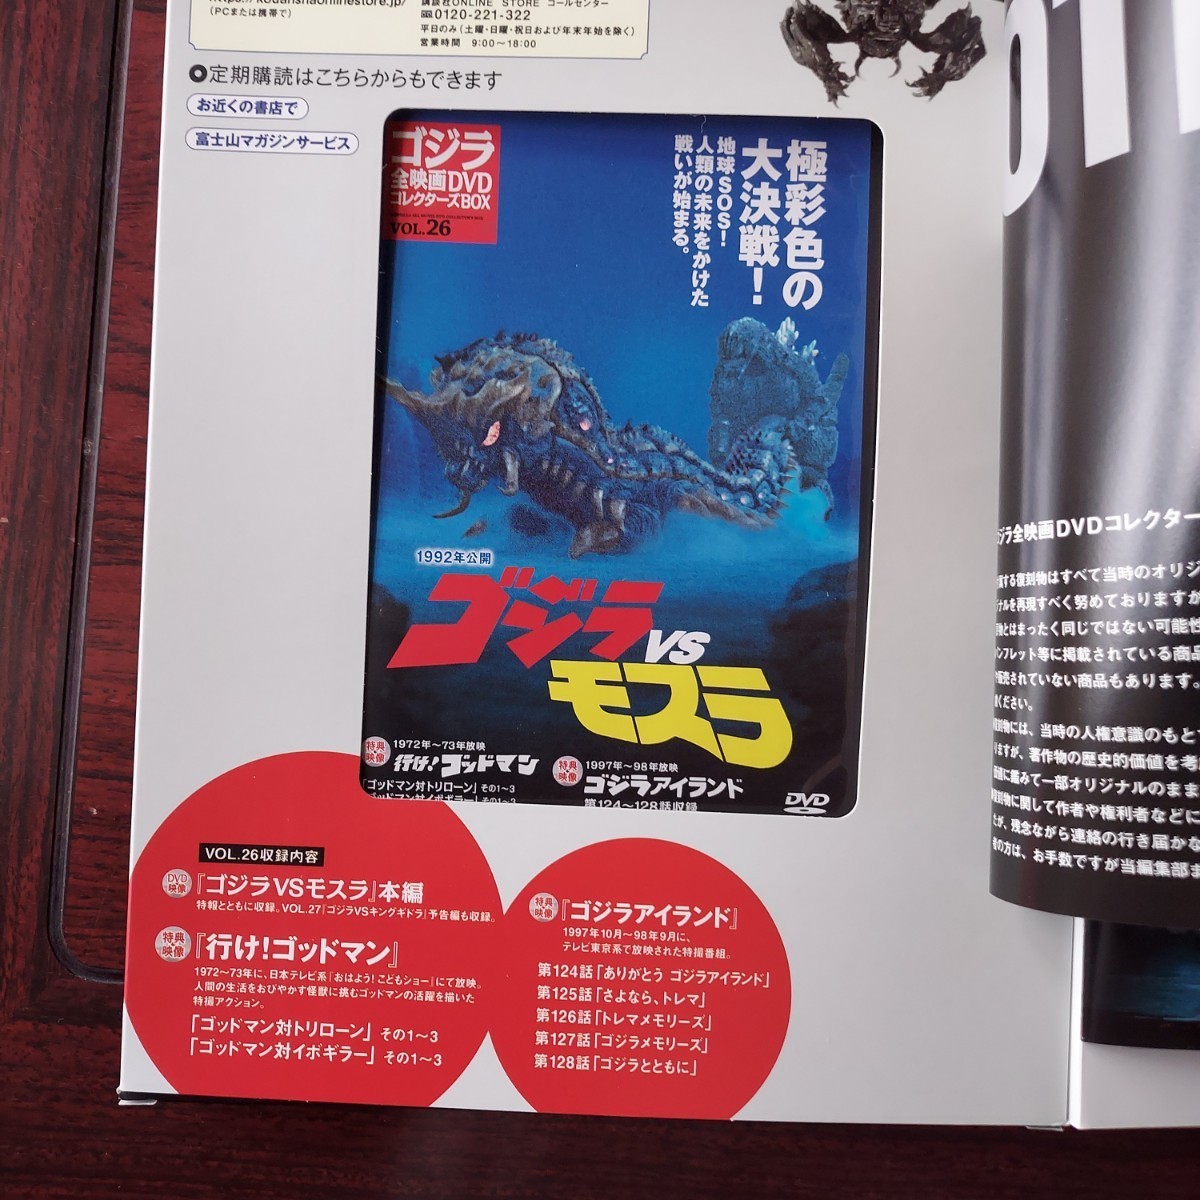  Godzilla VS Mothra 26*DVD appendix completion goods * Godzilla all movie DVD collectors BOX*1992 year public * poster unopened goods 